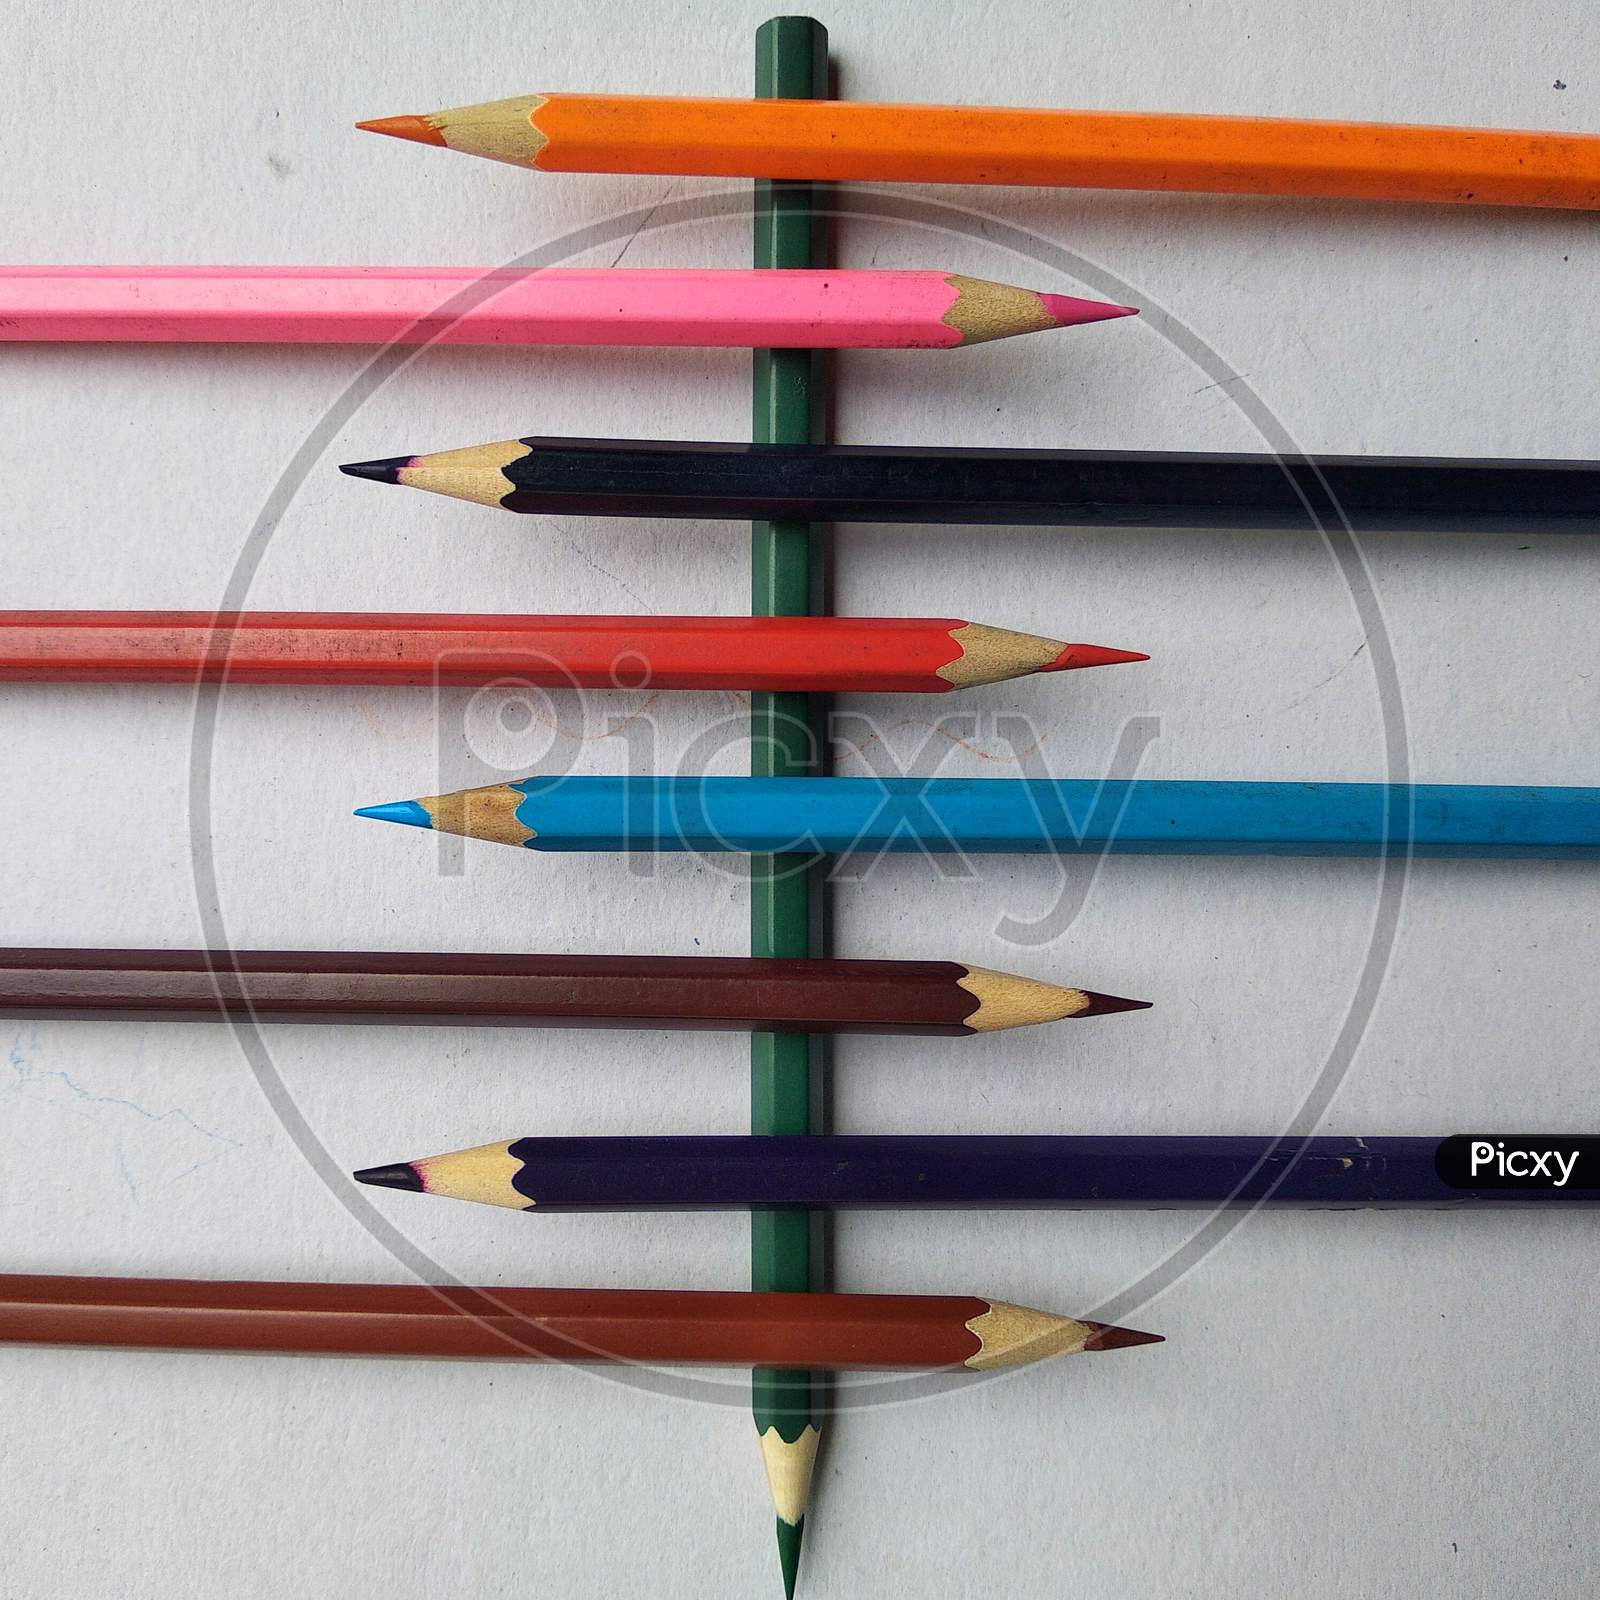 A single colour pencils holding so many colours shades